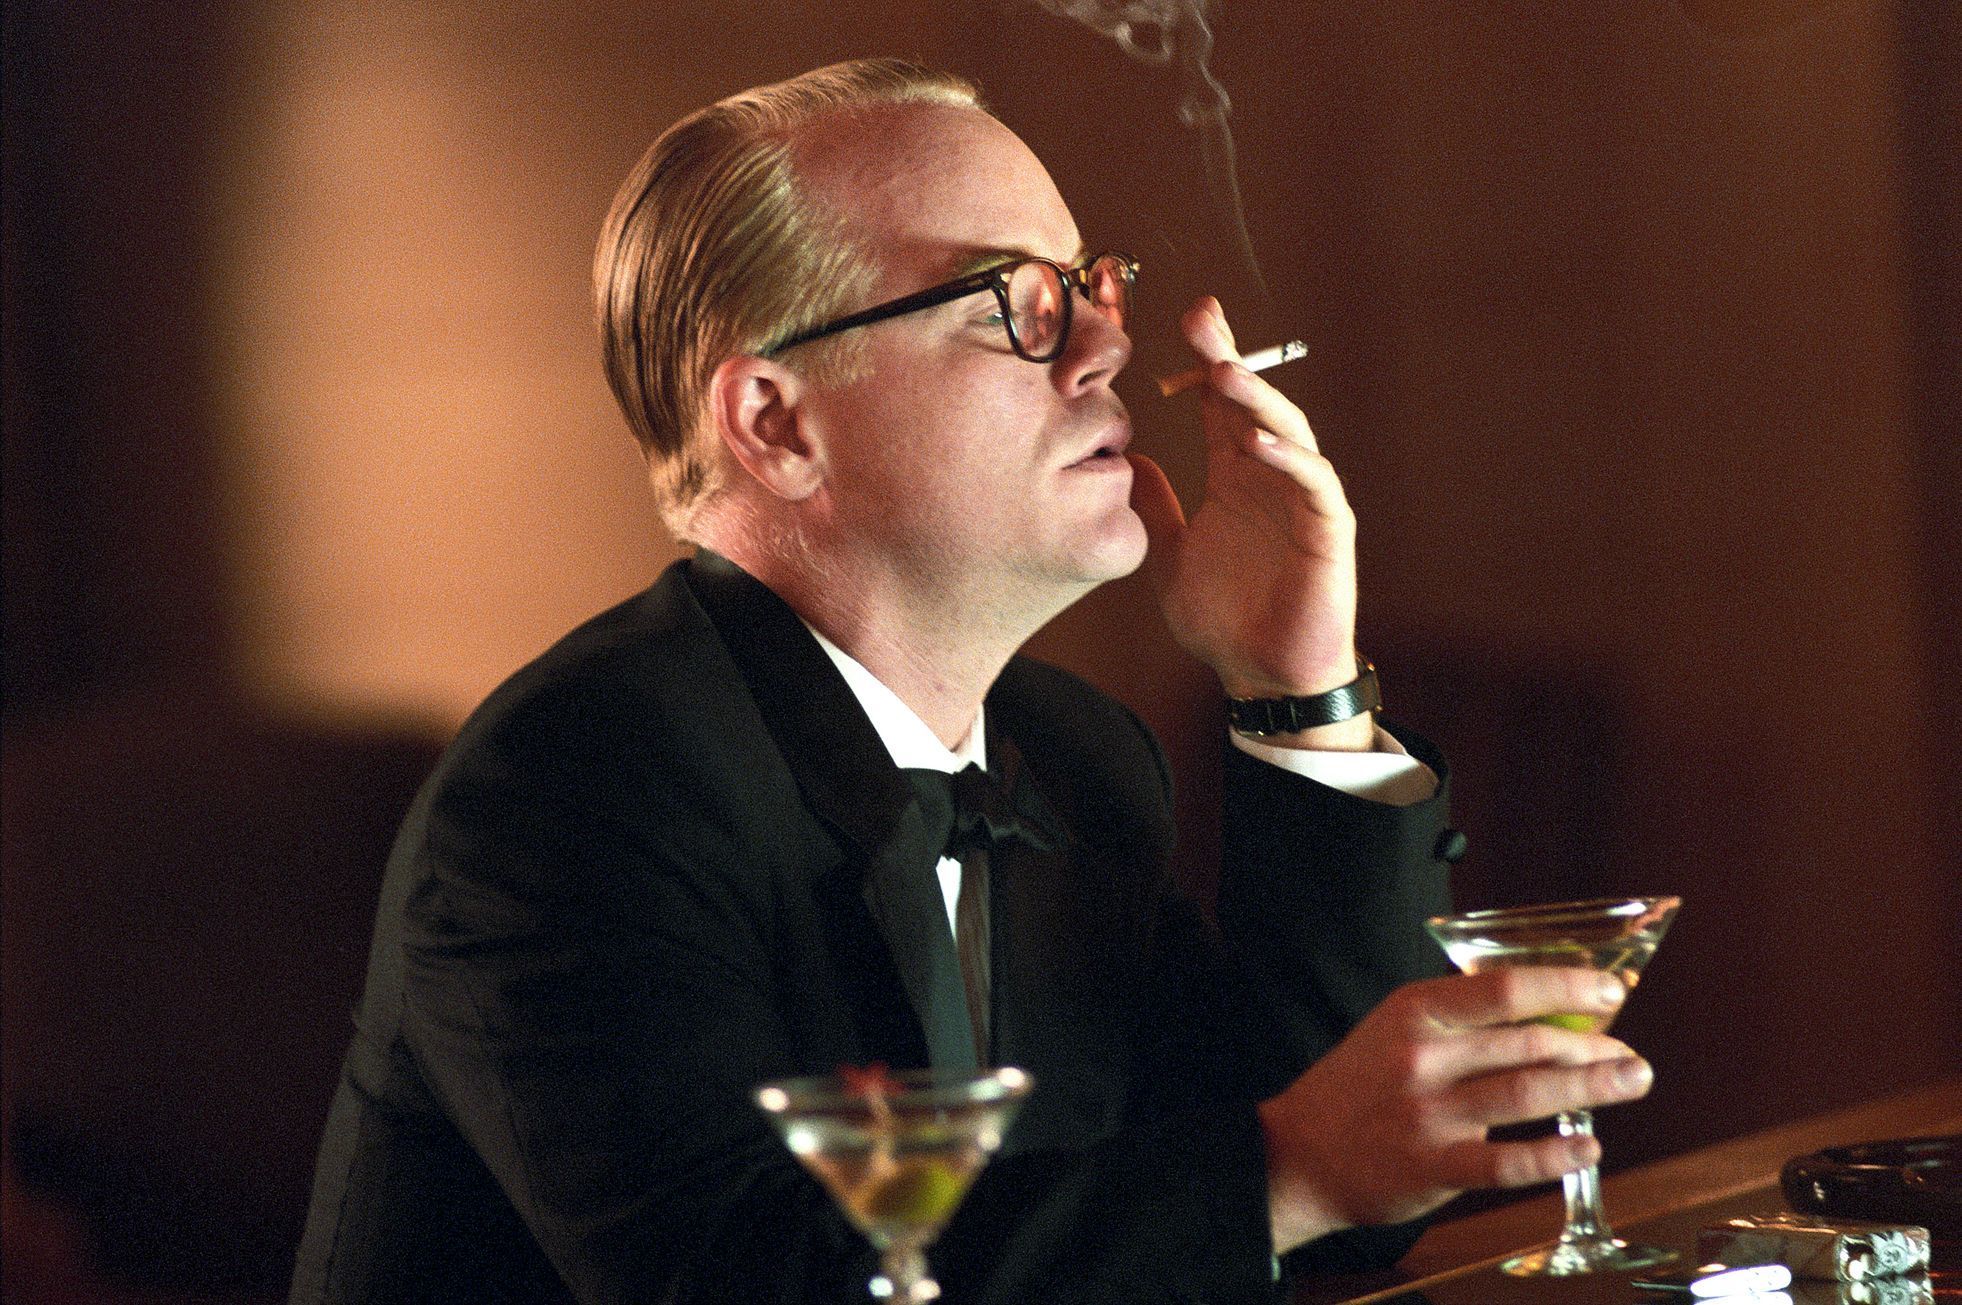 Philip Seymour Hoffman - Capote